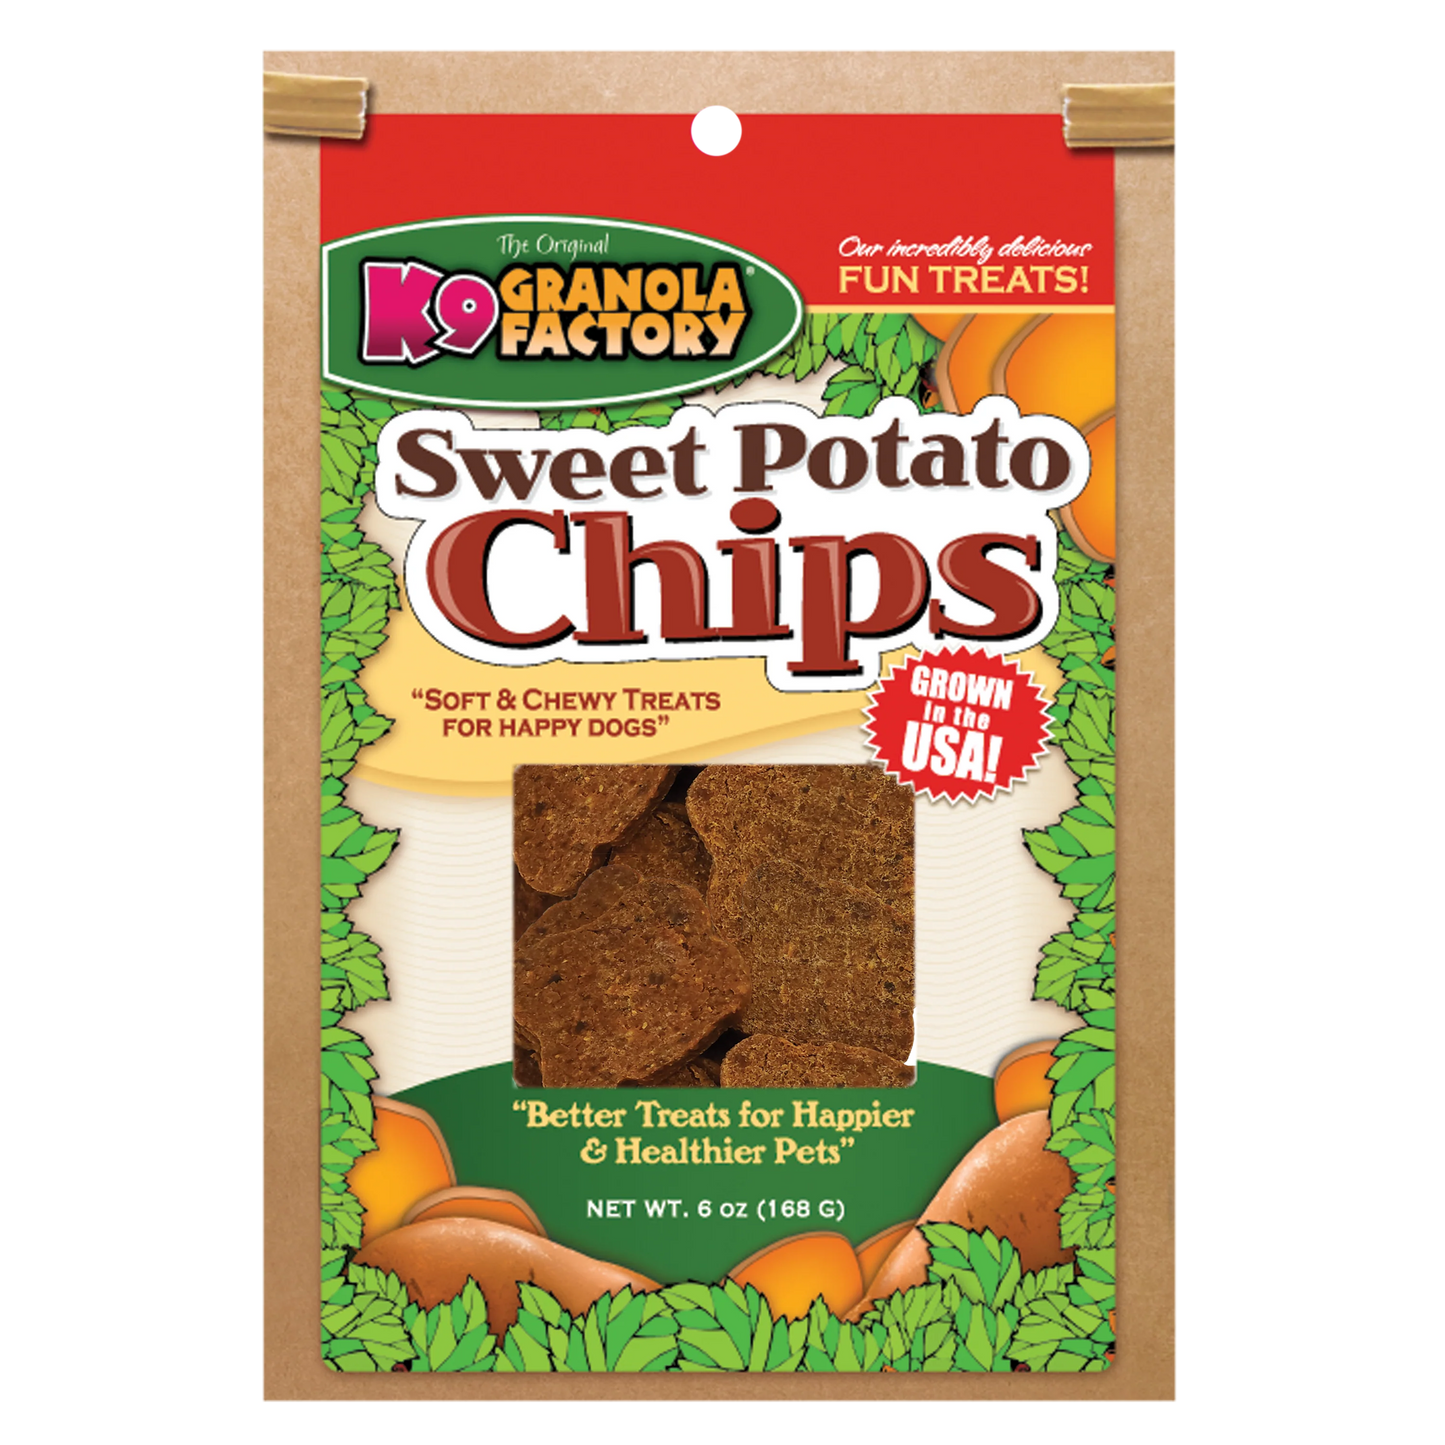 K9 Granola Factory Sweet Potato Chips